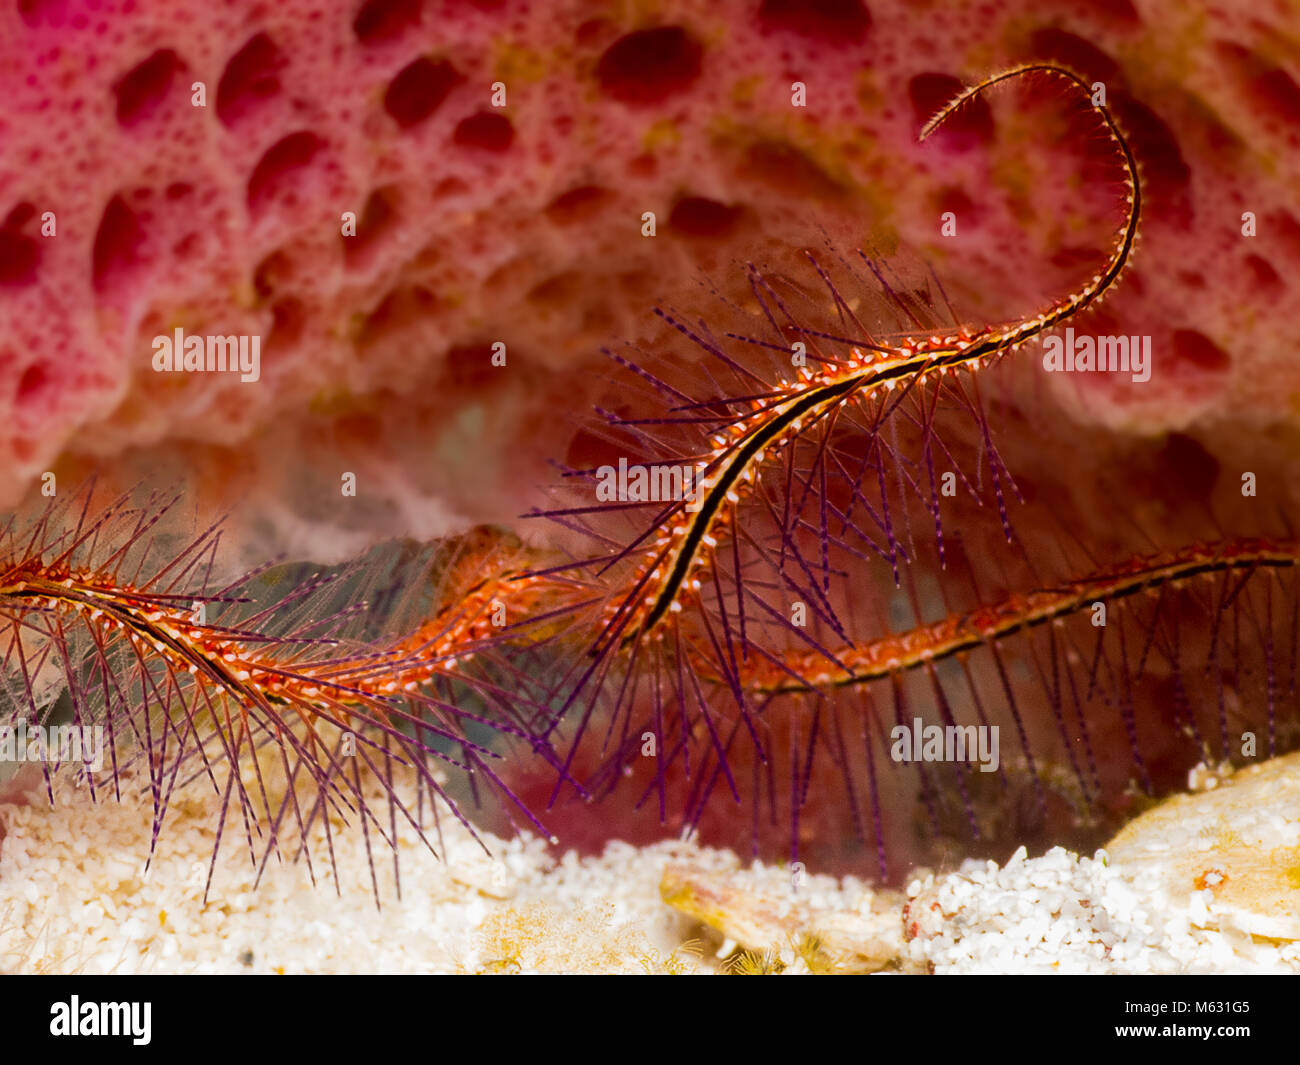 Brittle starfish inside of vase sponge on sand, closeup macro. Stock Photo